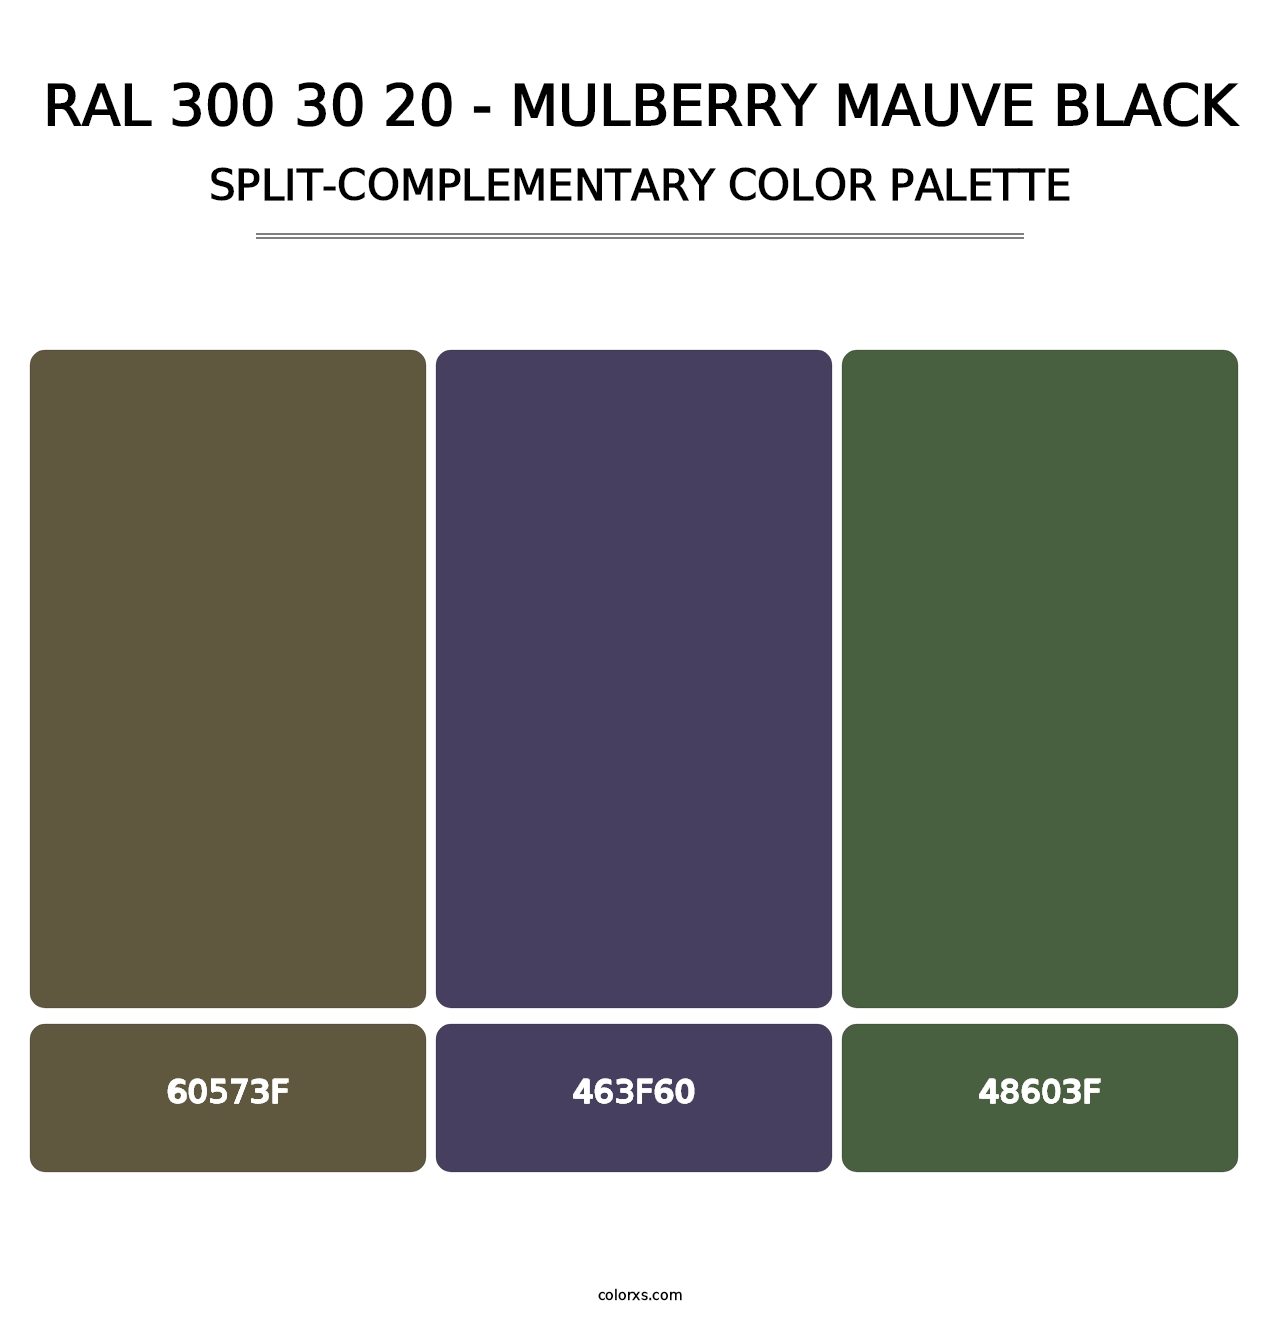 RAL 300 30 20 - Mulberry Mauve Black - Split-Complementary Color Palette